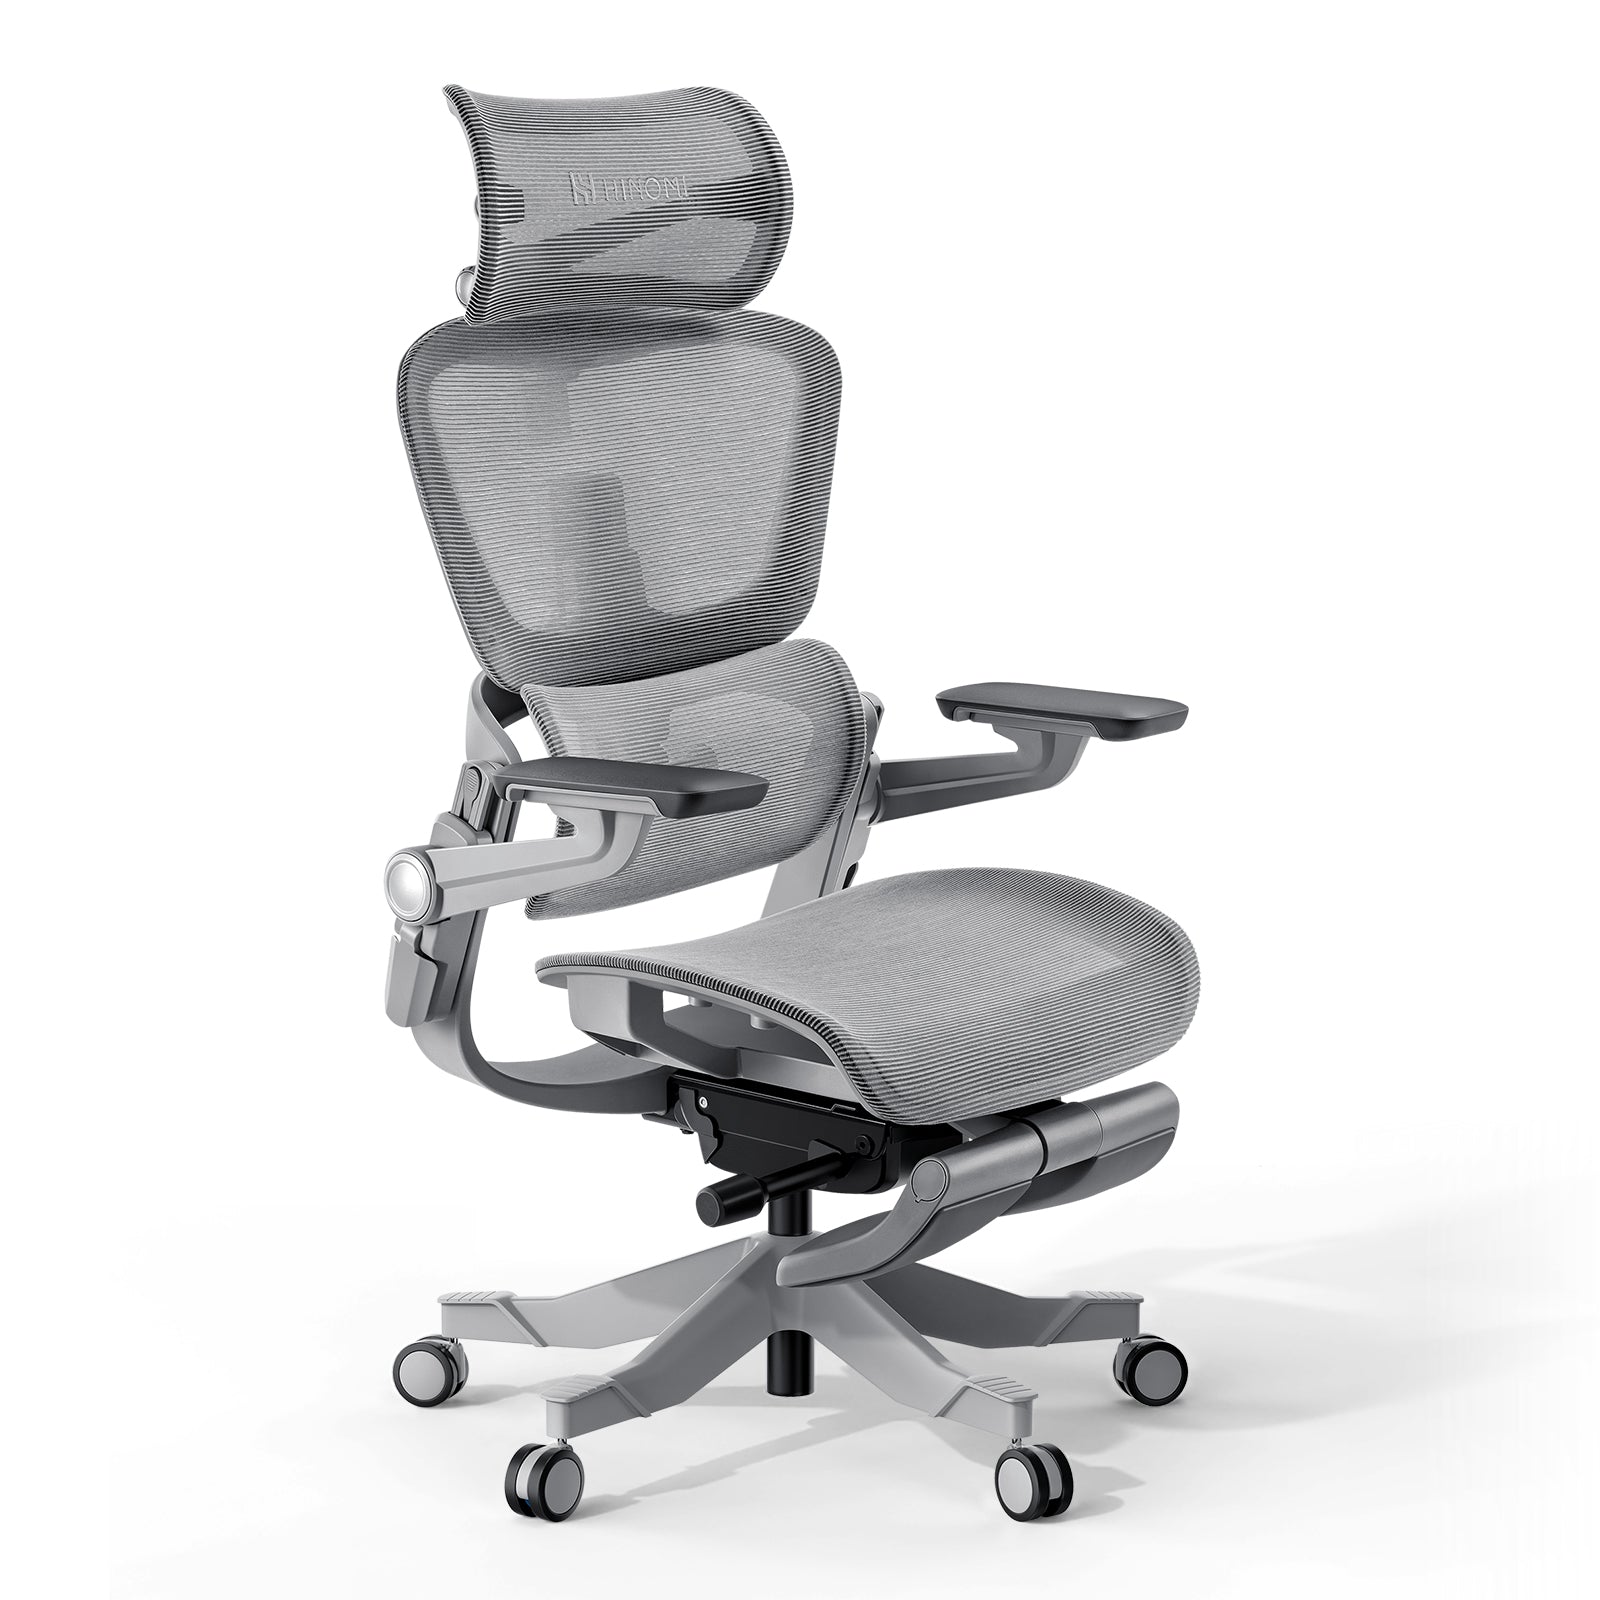 Hinomi h1 pro v2 ergonomic chair review #Hinomi #ergonomicchair #h1prov2  #lazada 